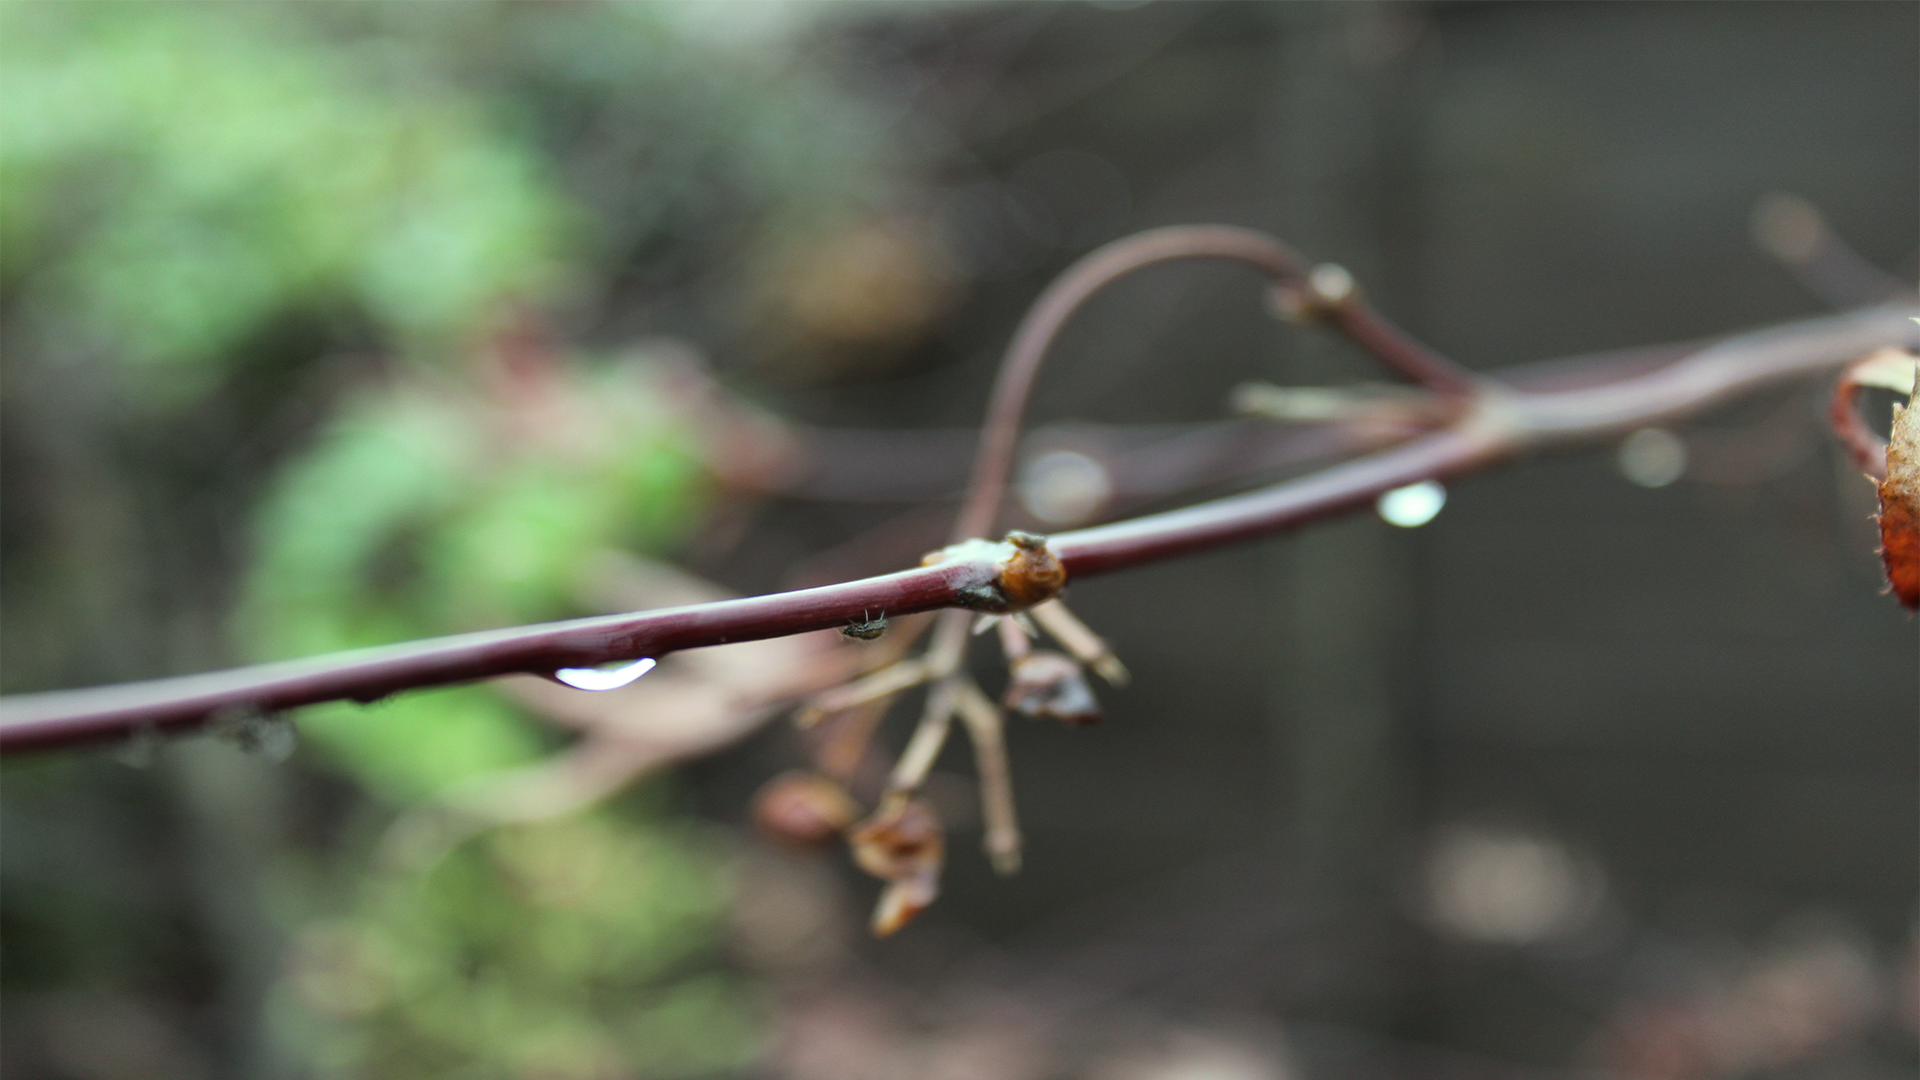 General 1920x1080 blurred macro twigs plants water drops outdoors